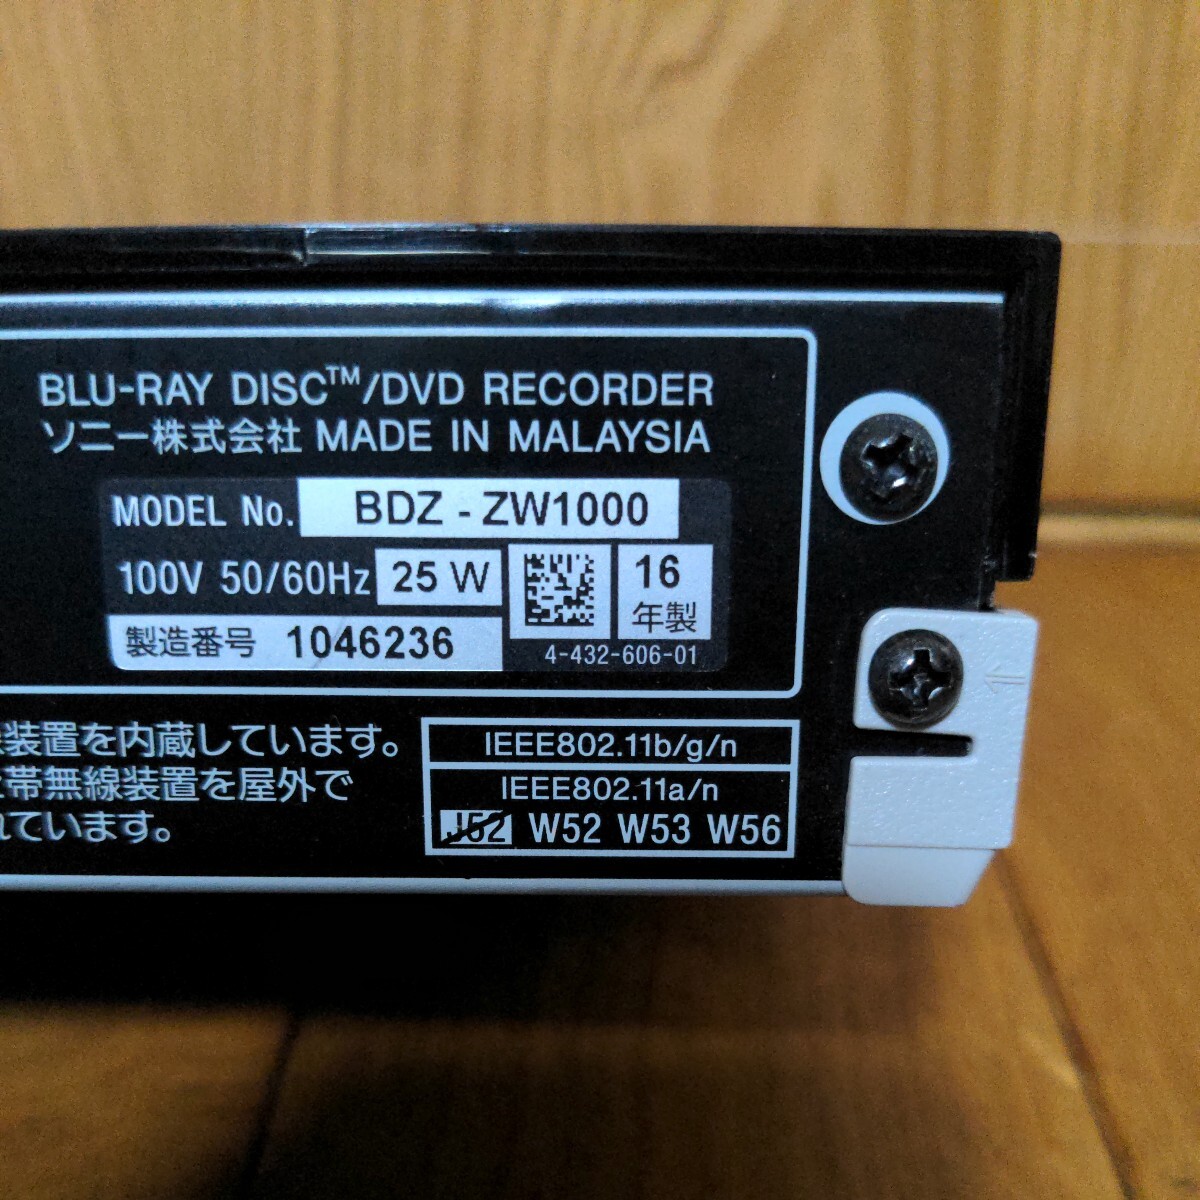 SONY Blue-ray магнитофон BDZ-ZW1000 2 номер комплект одновременно видеозапись рабочий товар дистанционный пульт b-cas карта шнур электропитания ②